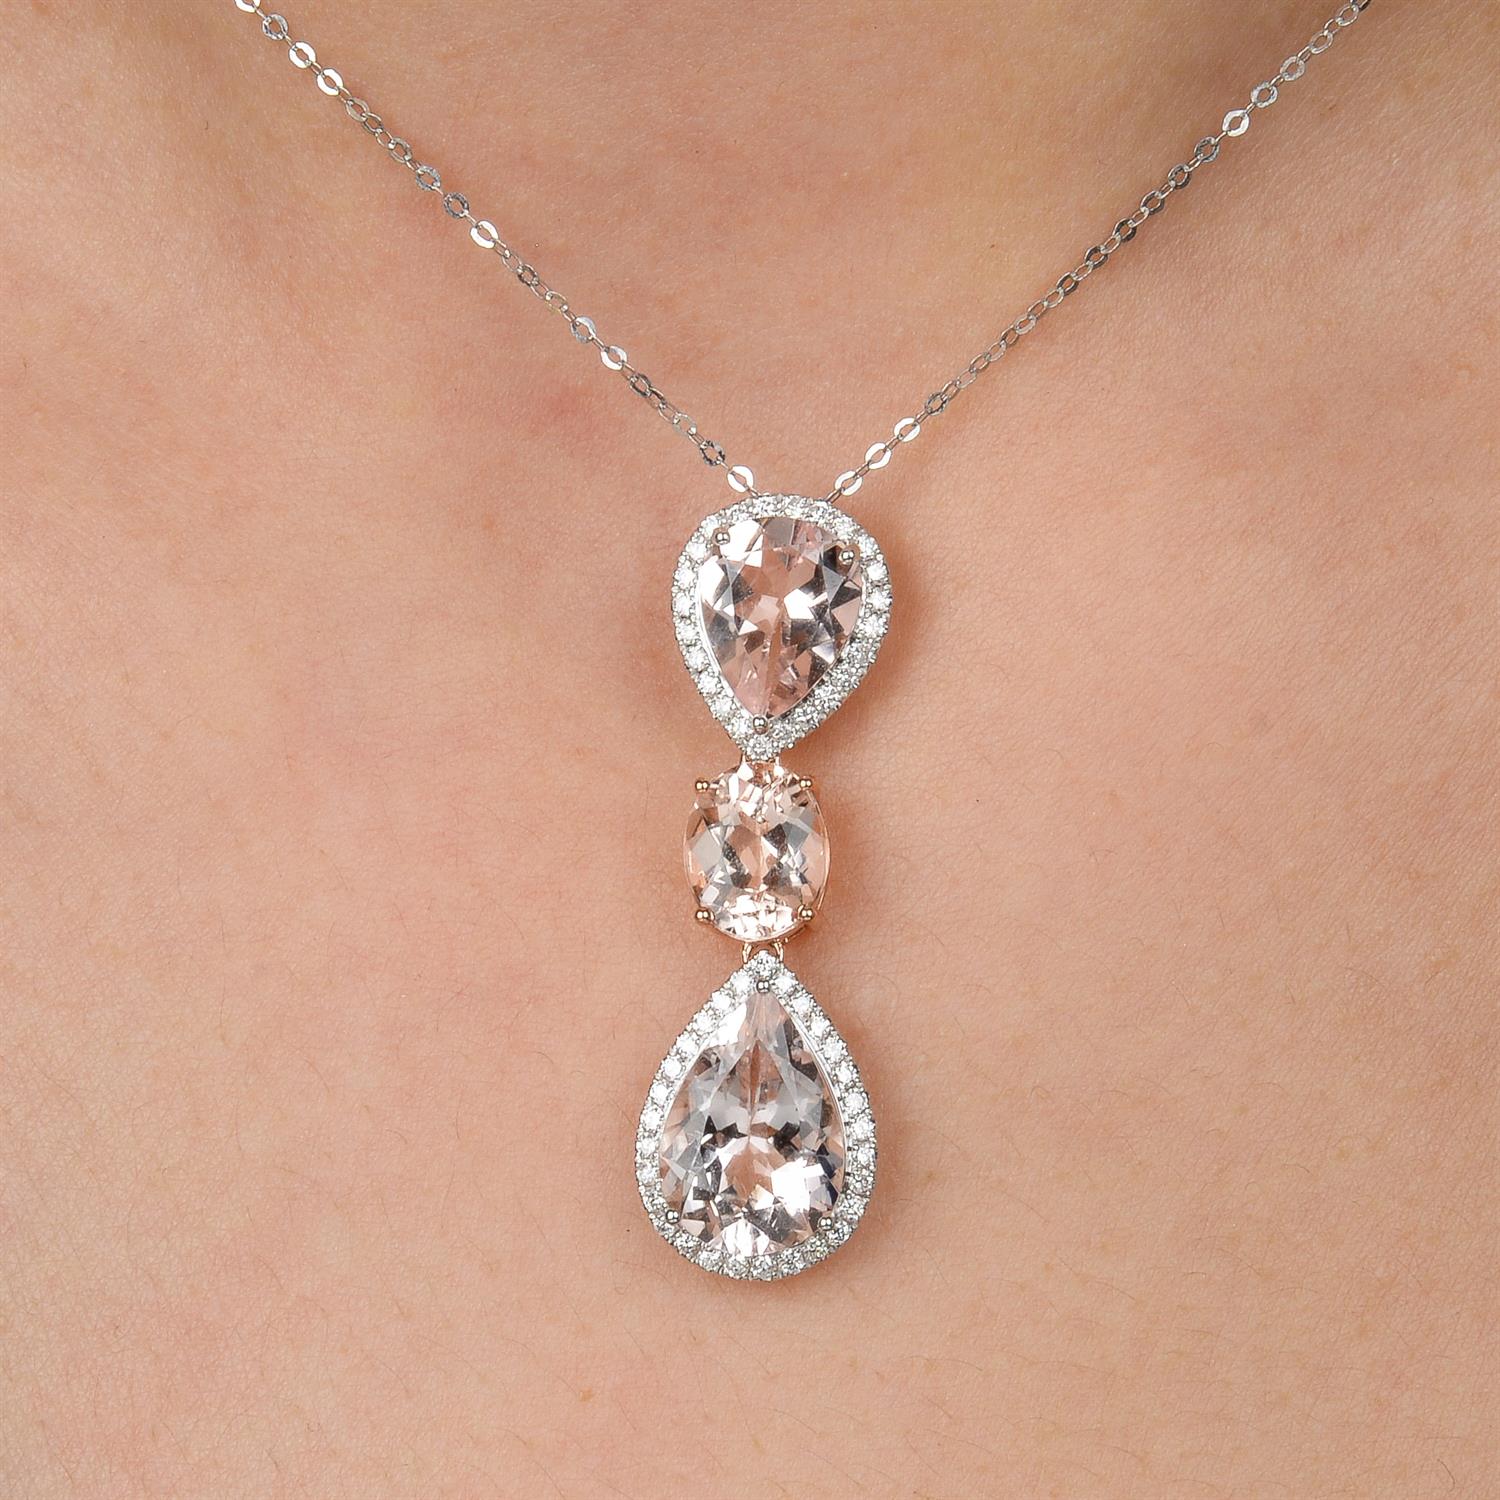 Morganite and diamond pendant, with chain